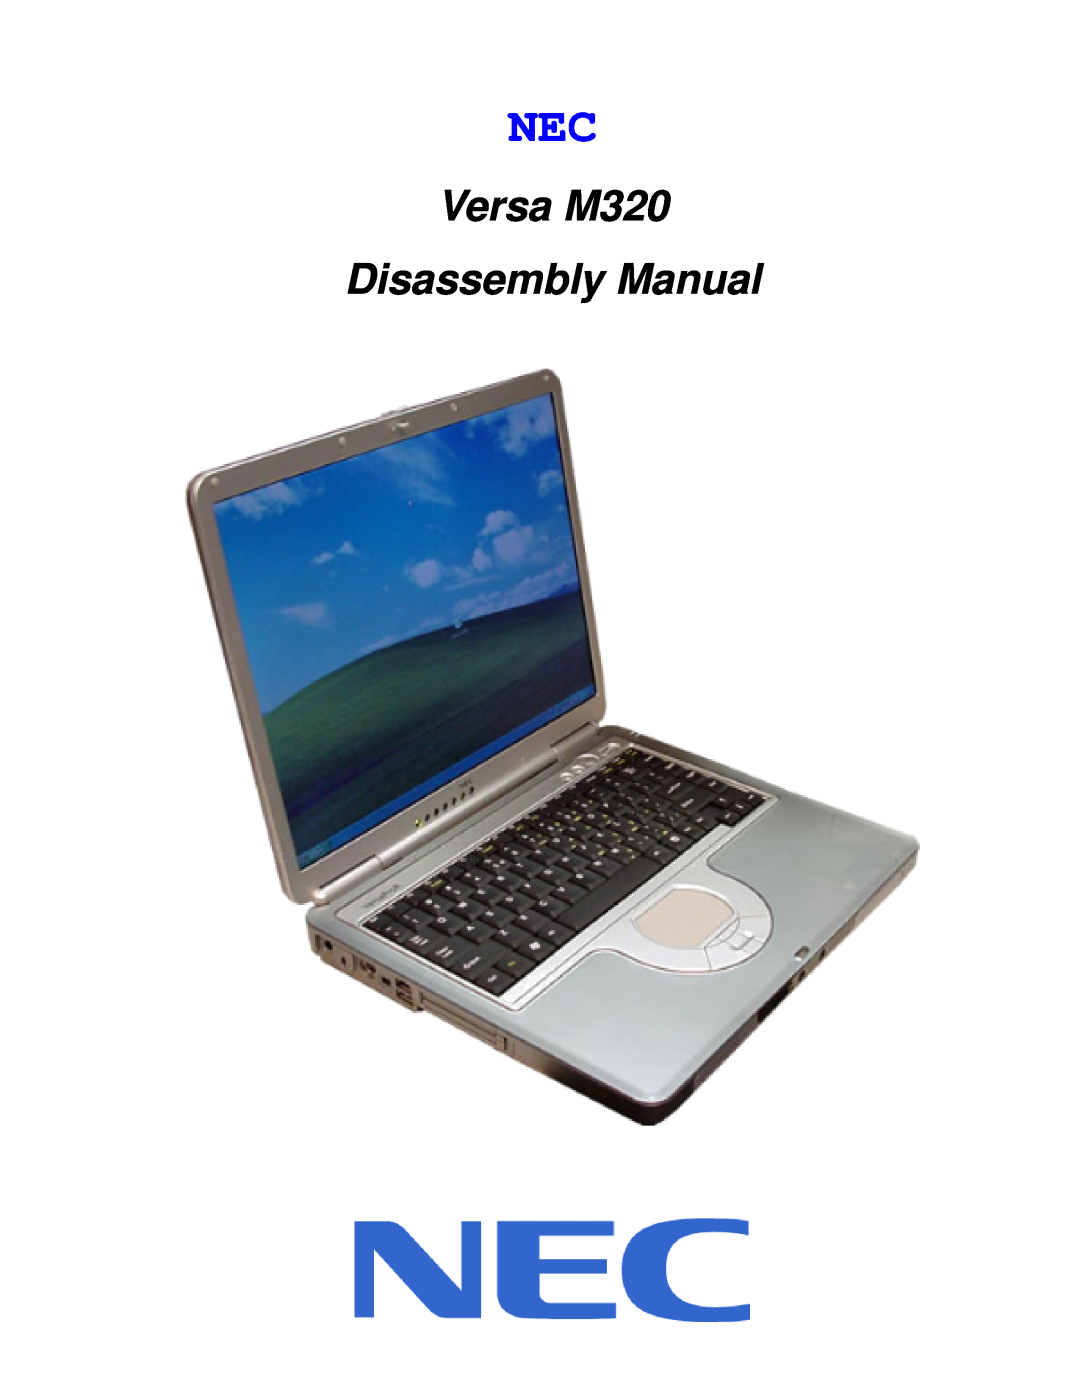 NEC manual Versa M320 Disassembly Manual 